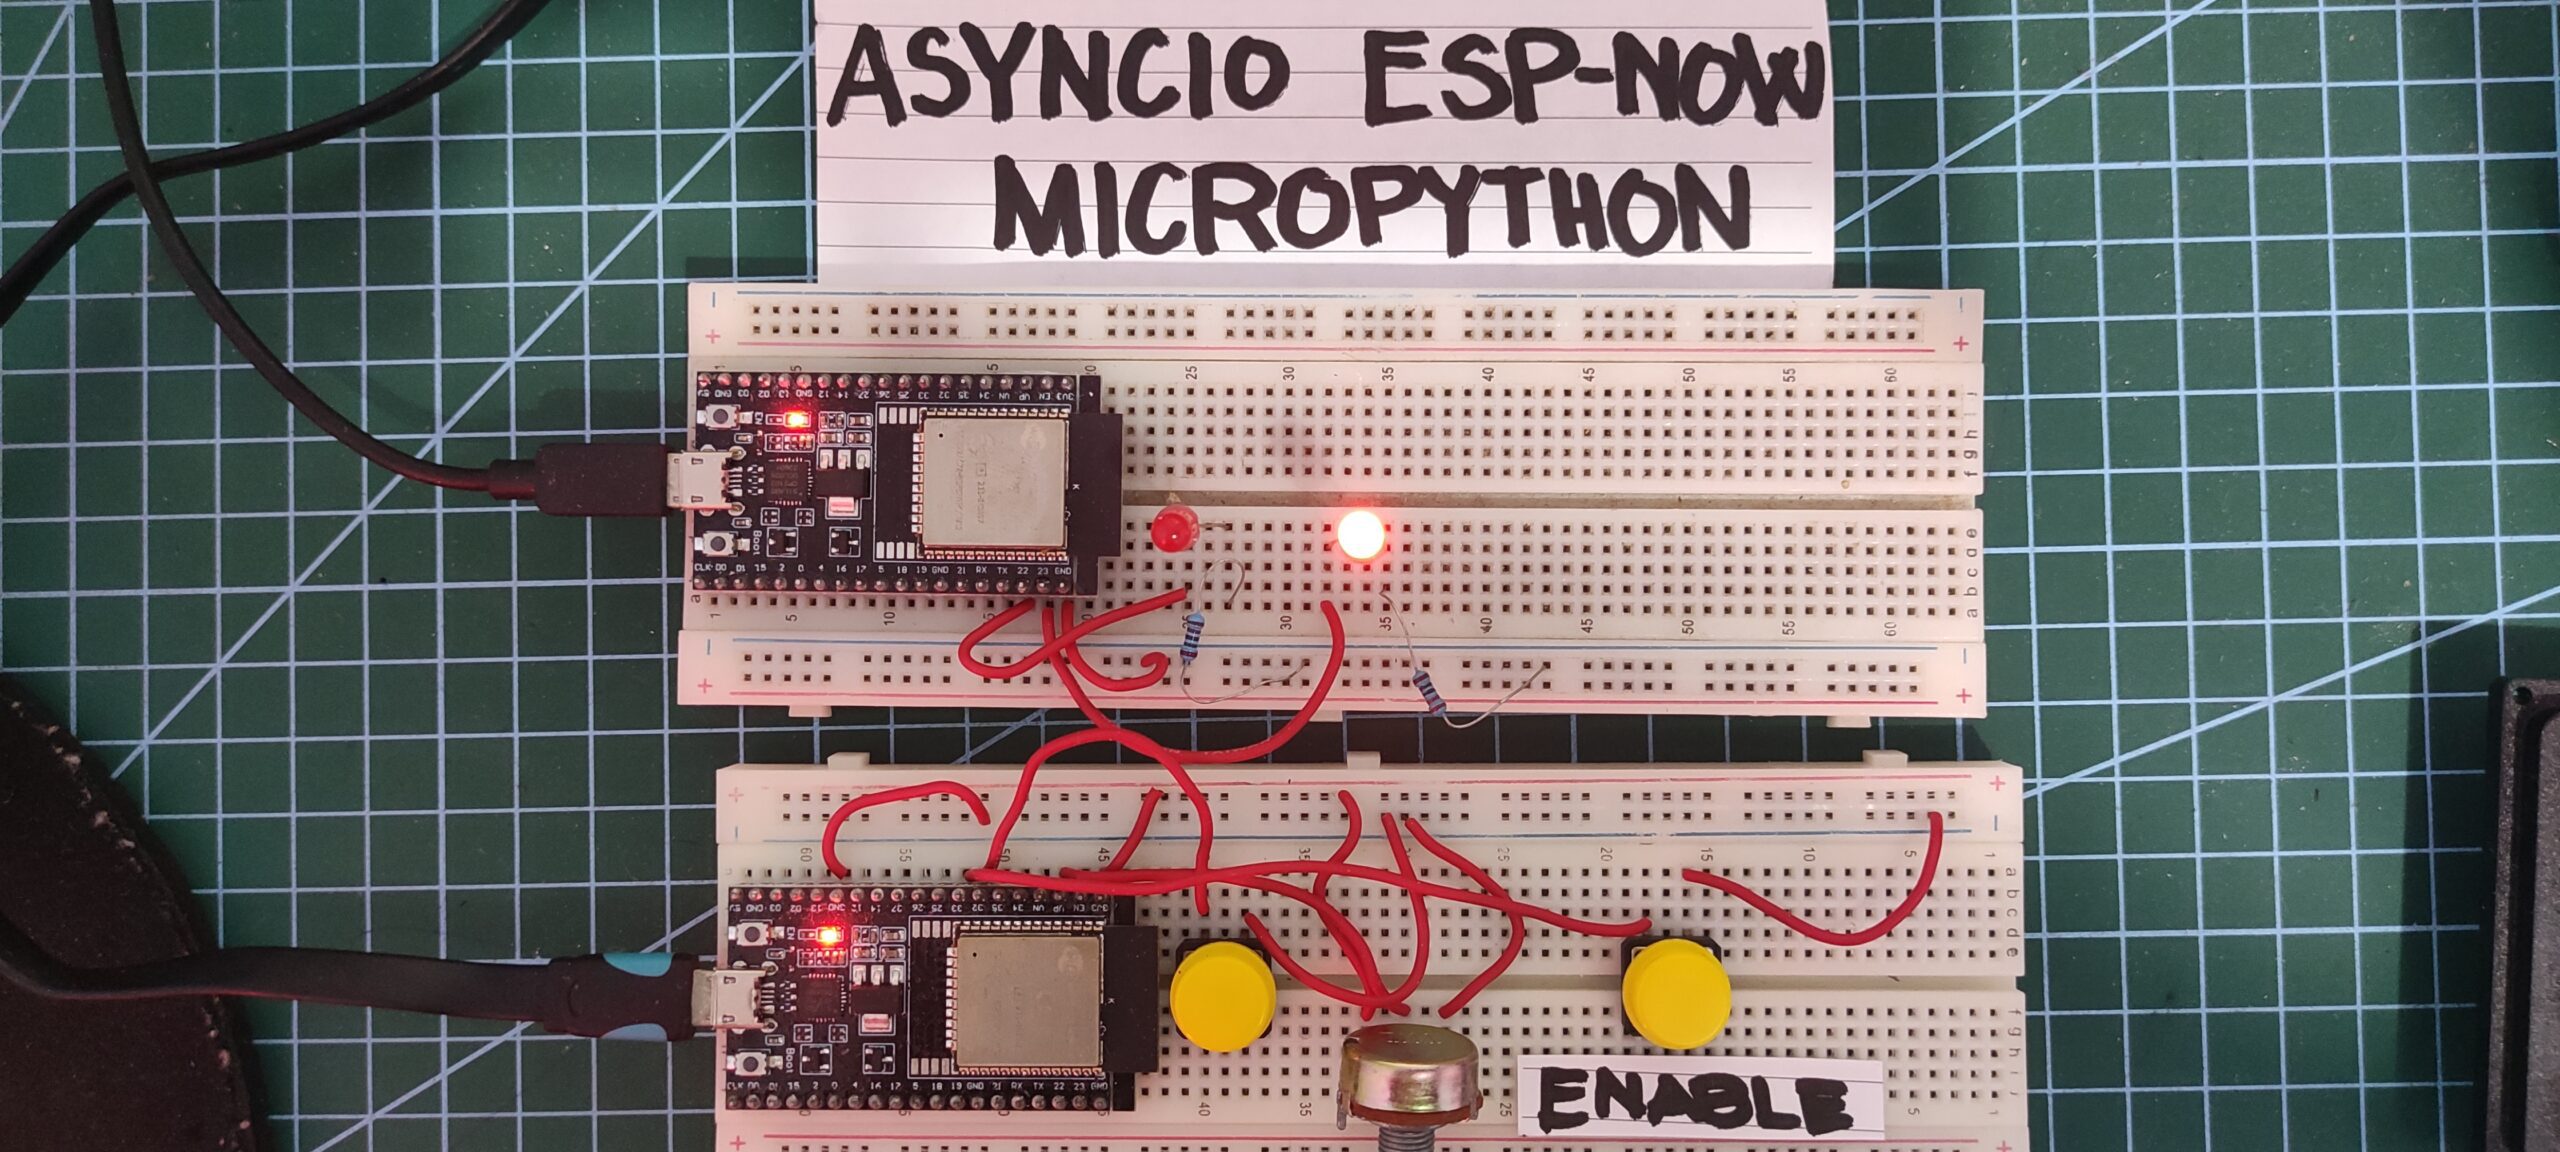 Demo project - ESP-NOW in MicroPython with AsyncIO